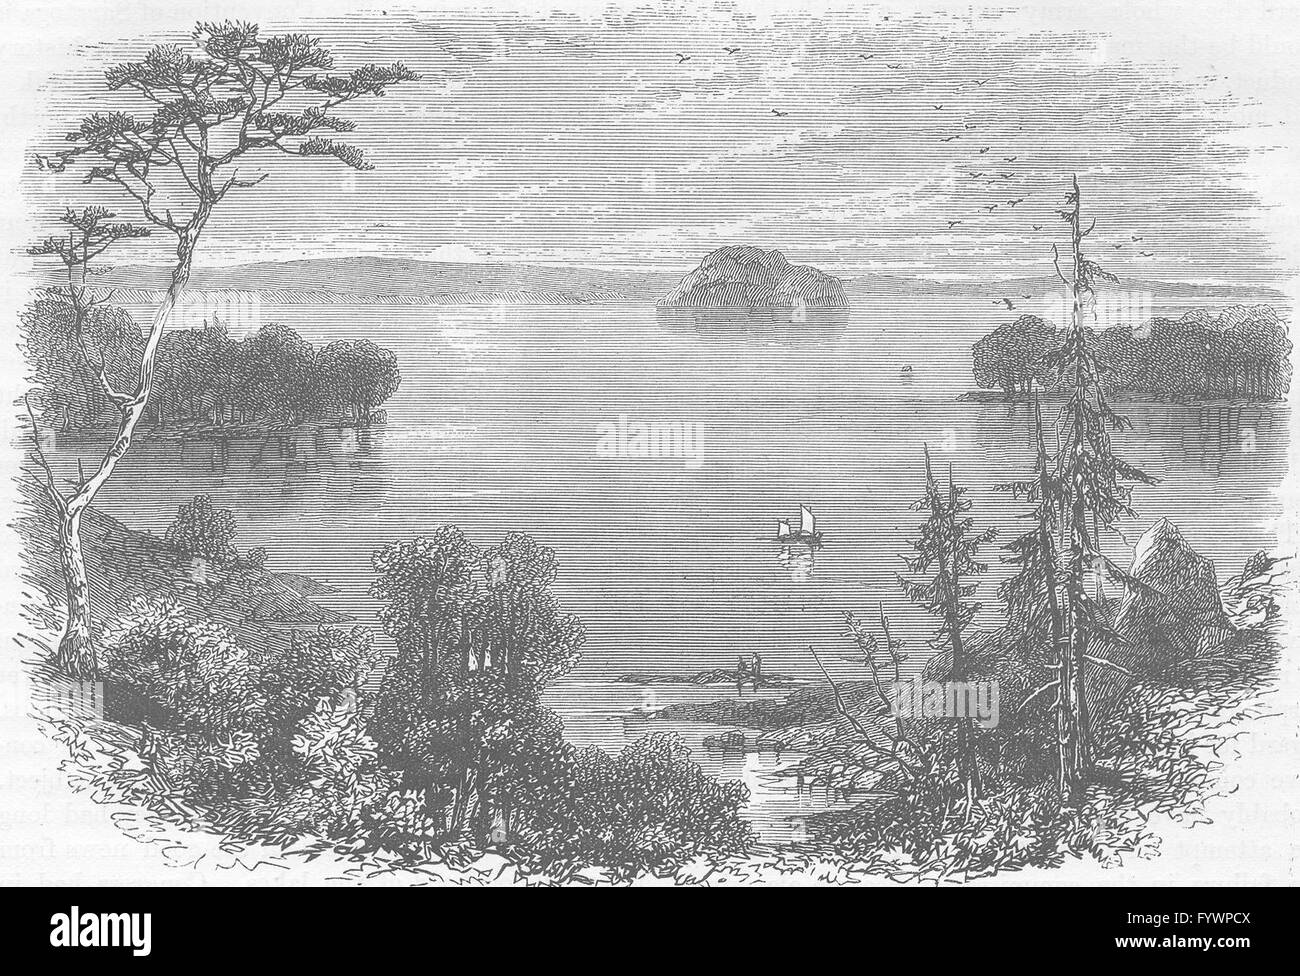 NEW YORK: Saratoga Lake, antique print c1880 Stock Photo - Alamy